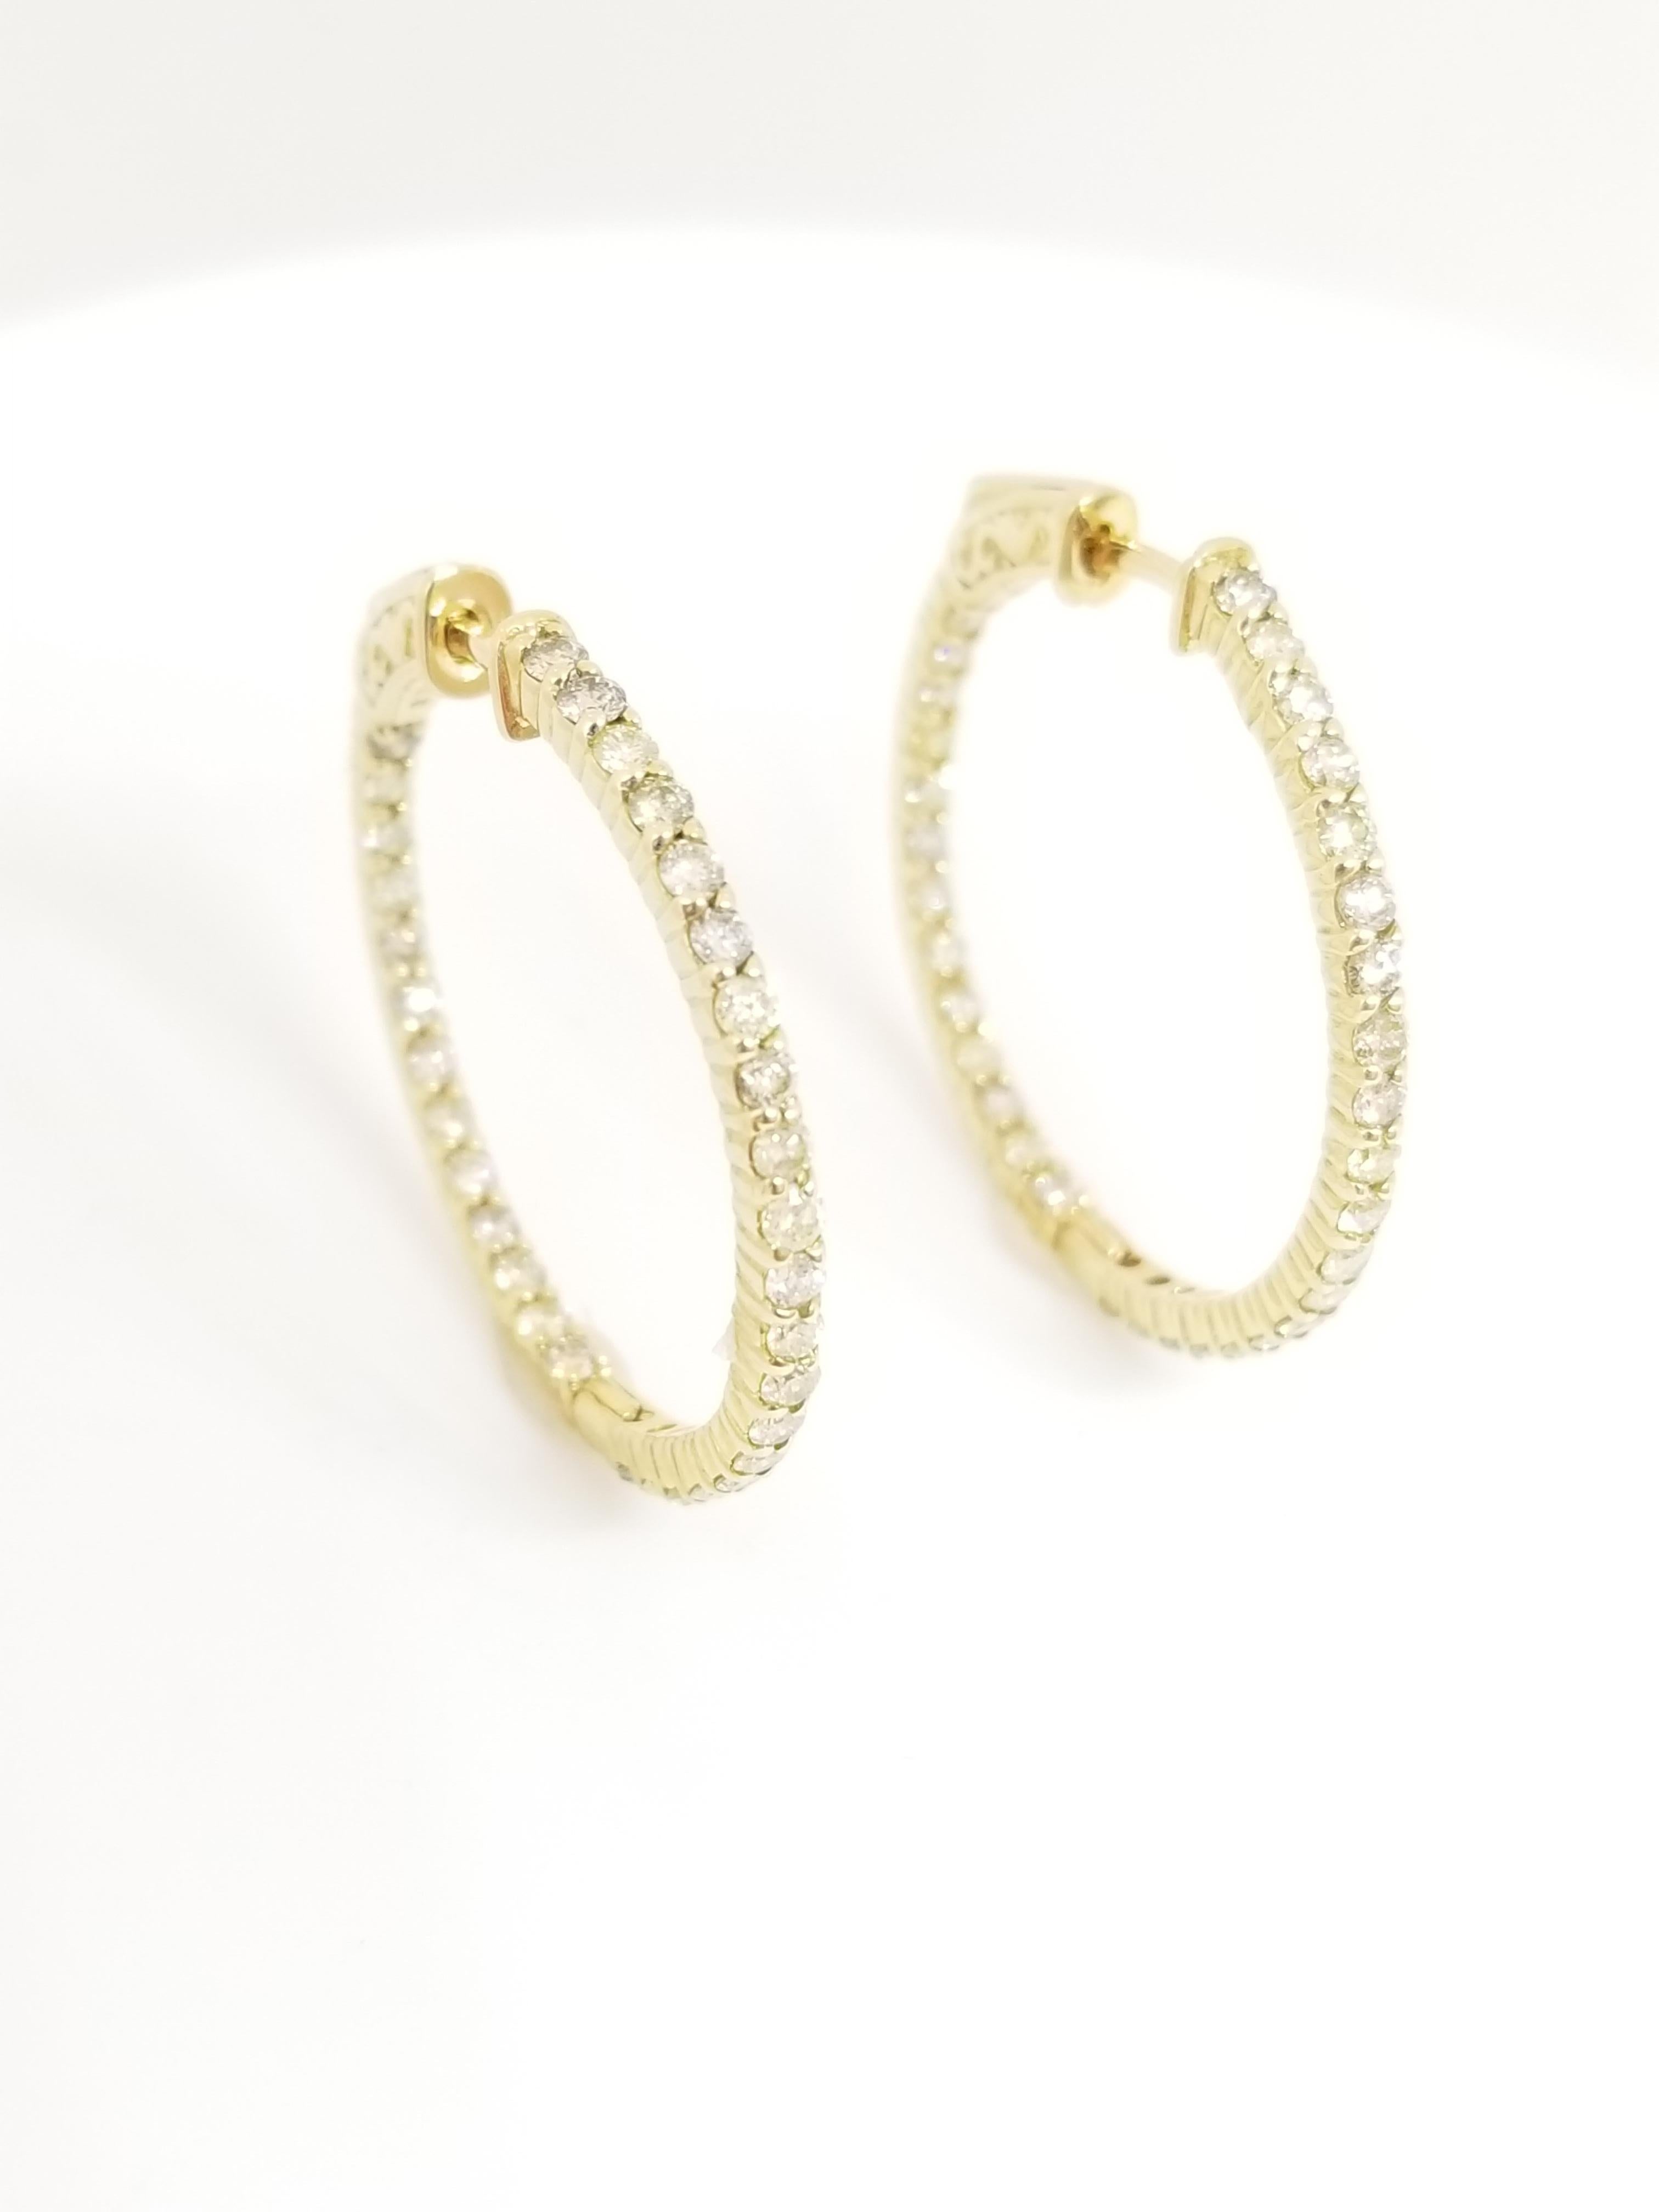 Round Cut 0.98 Carat Diamond Hoops Earrings 14 Karat Yellow Gold